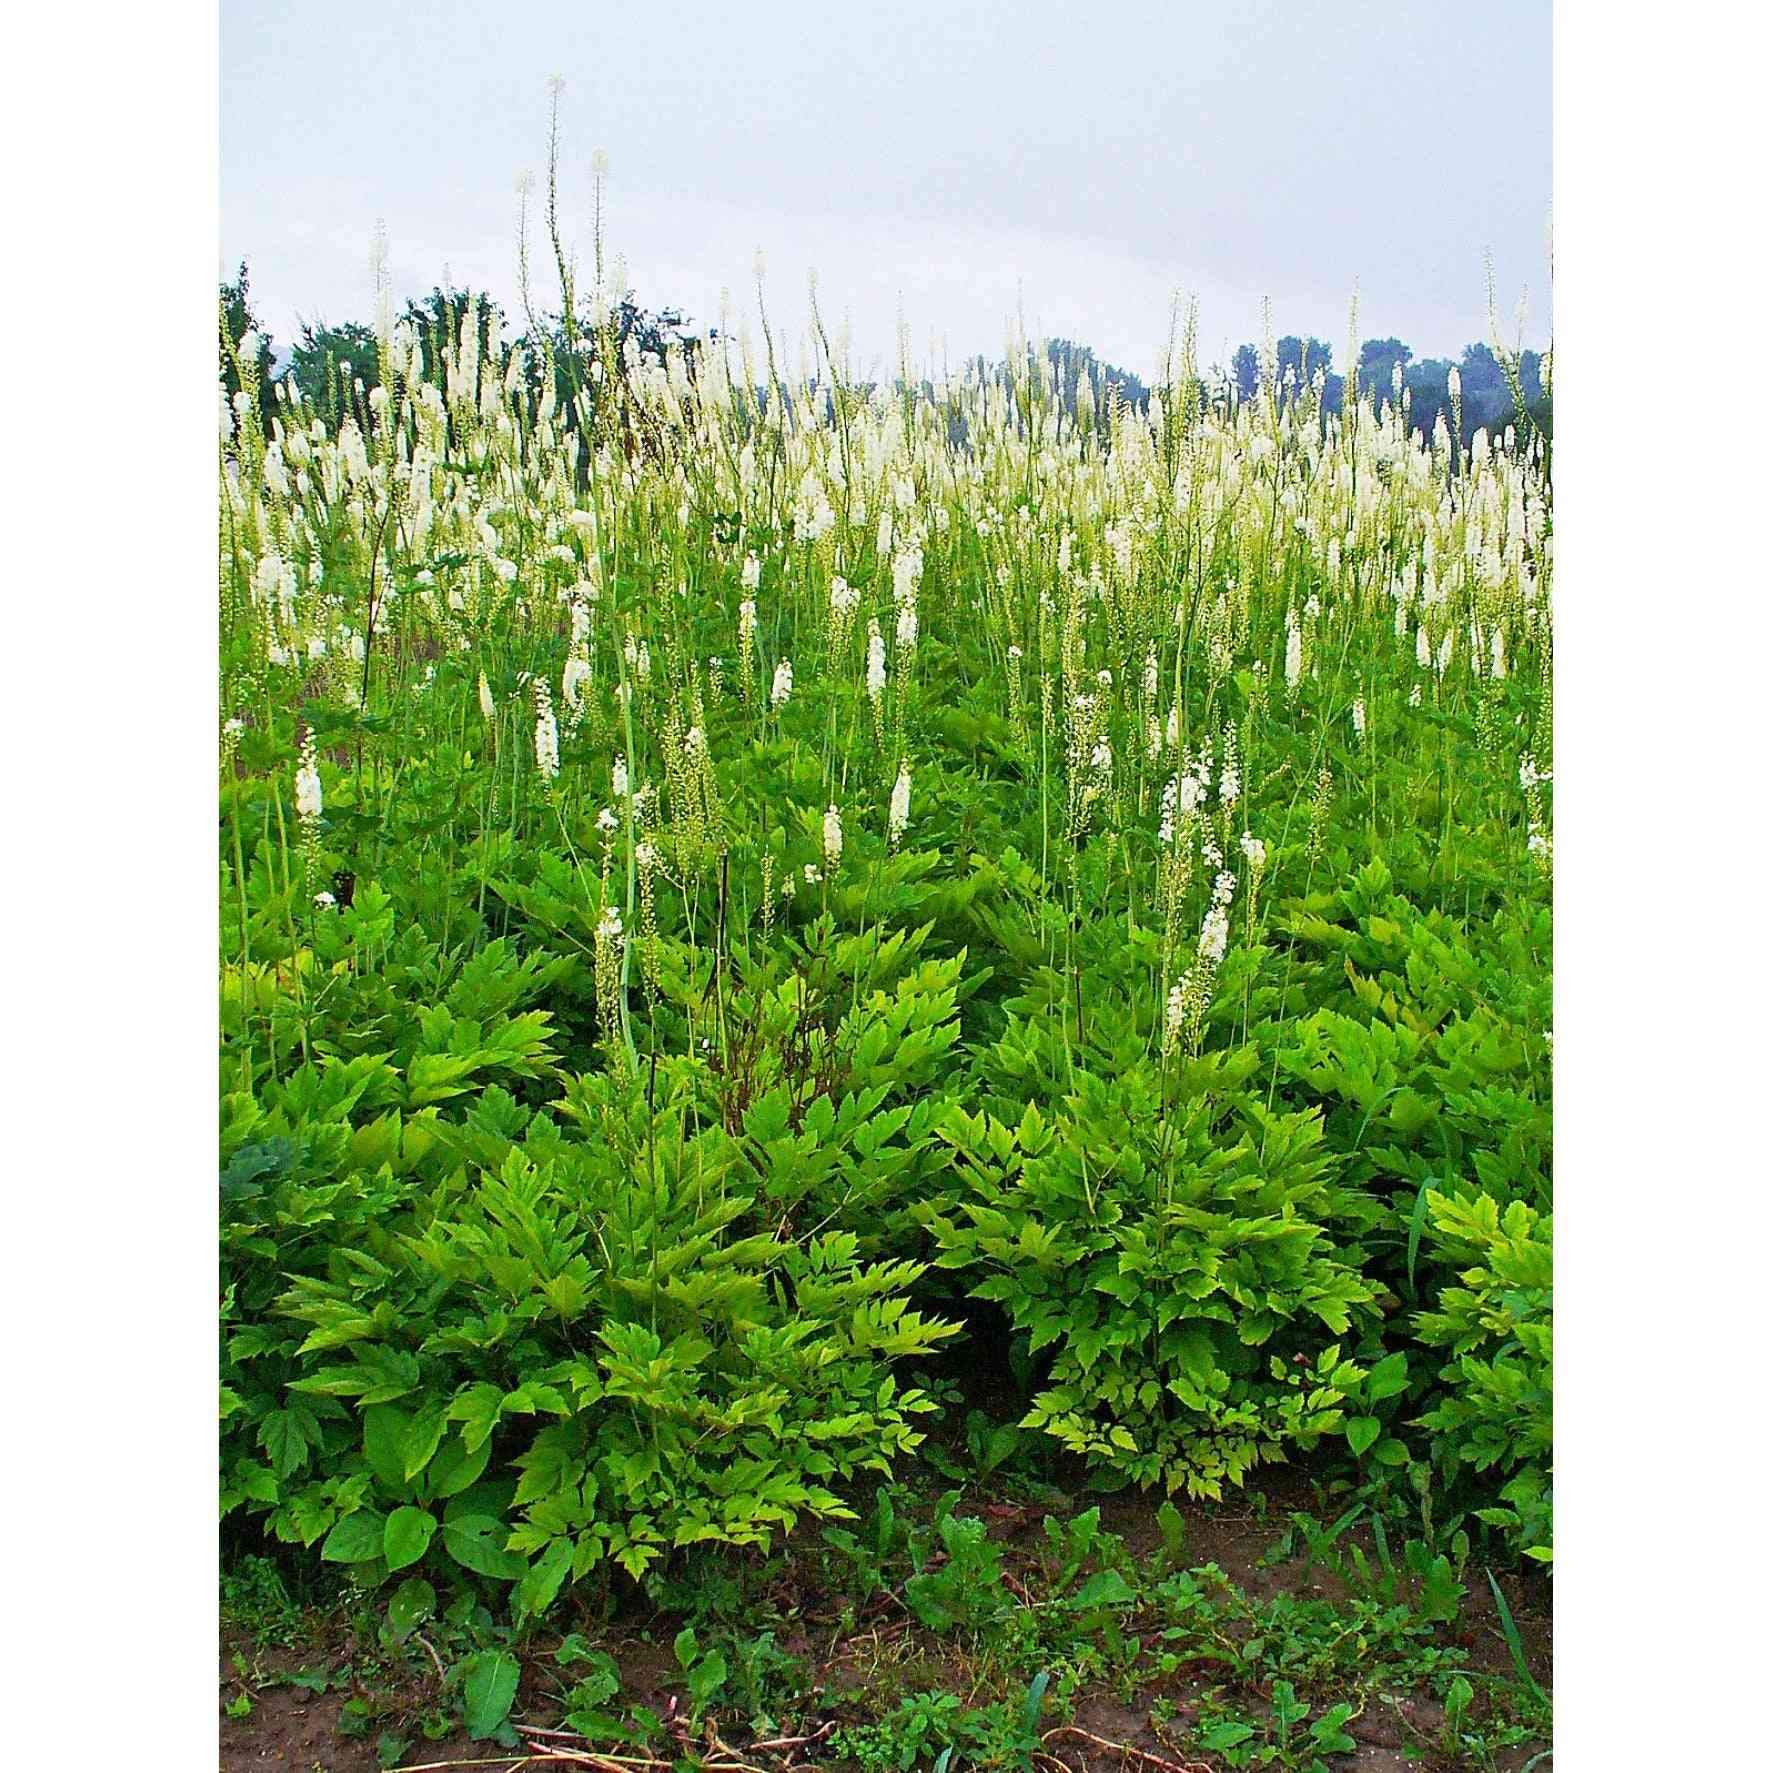 Cimicifuga racemosa / Actaea racemosa (Black cohosh, Black Snakeroot)  Natural Communities LLC